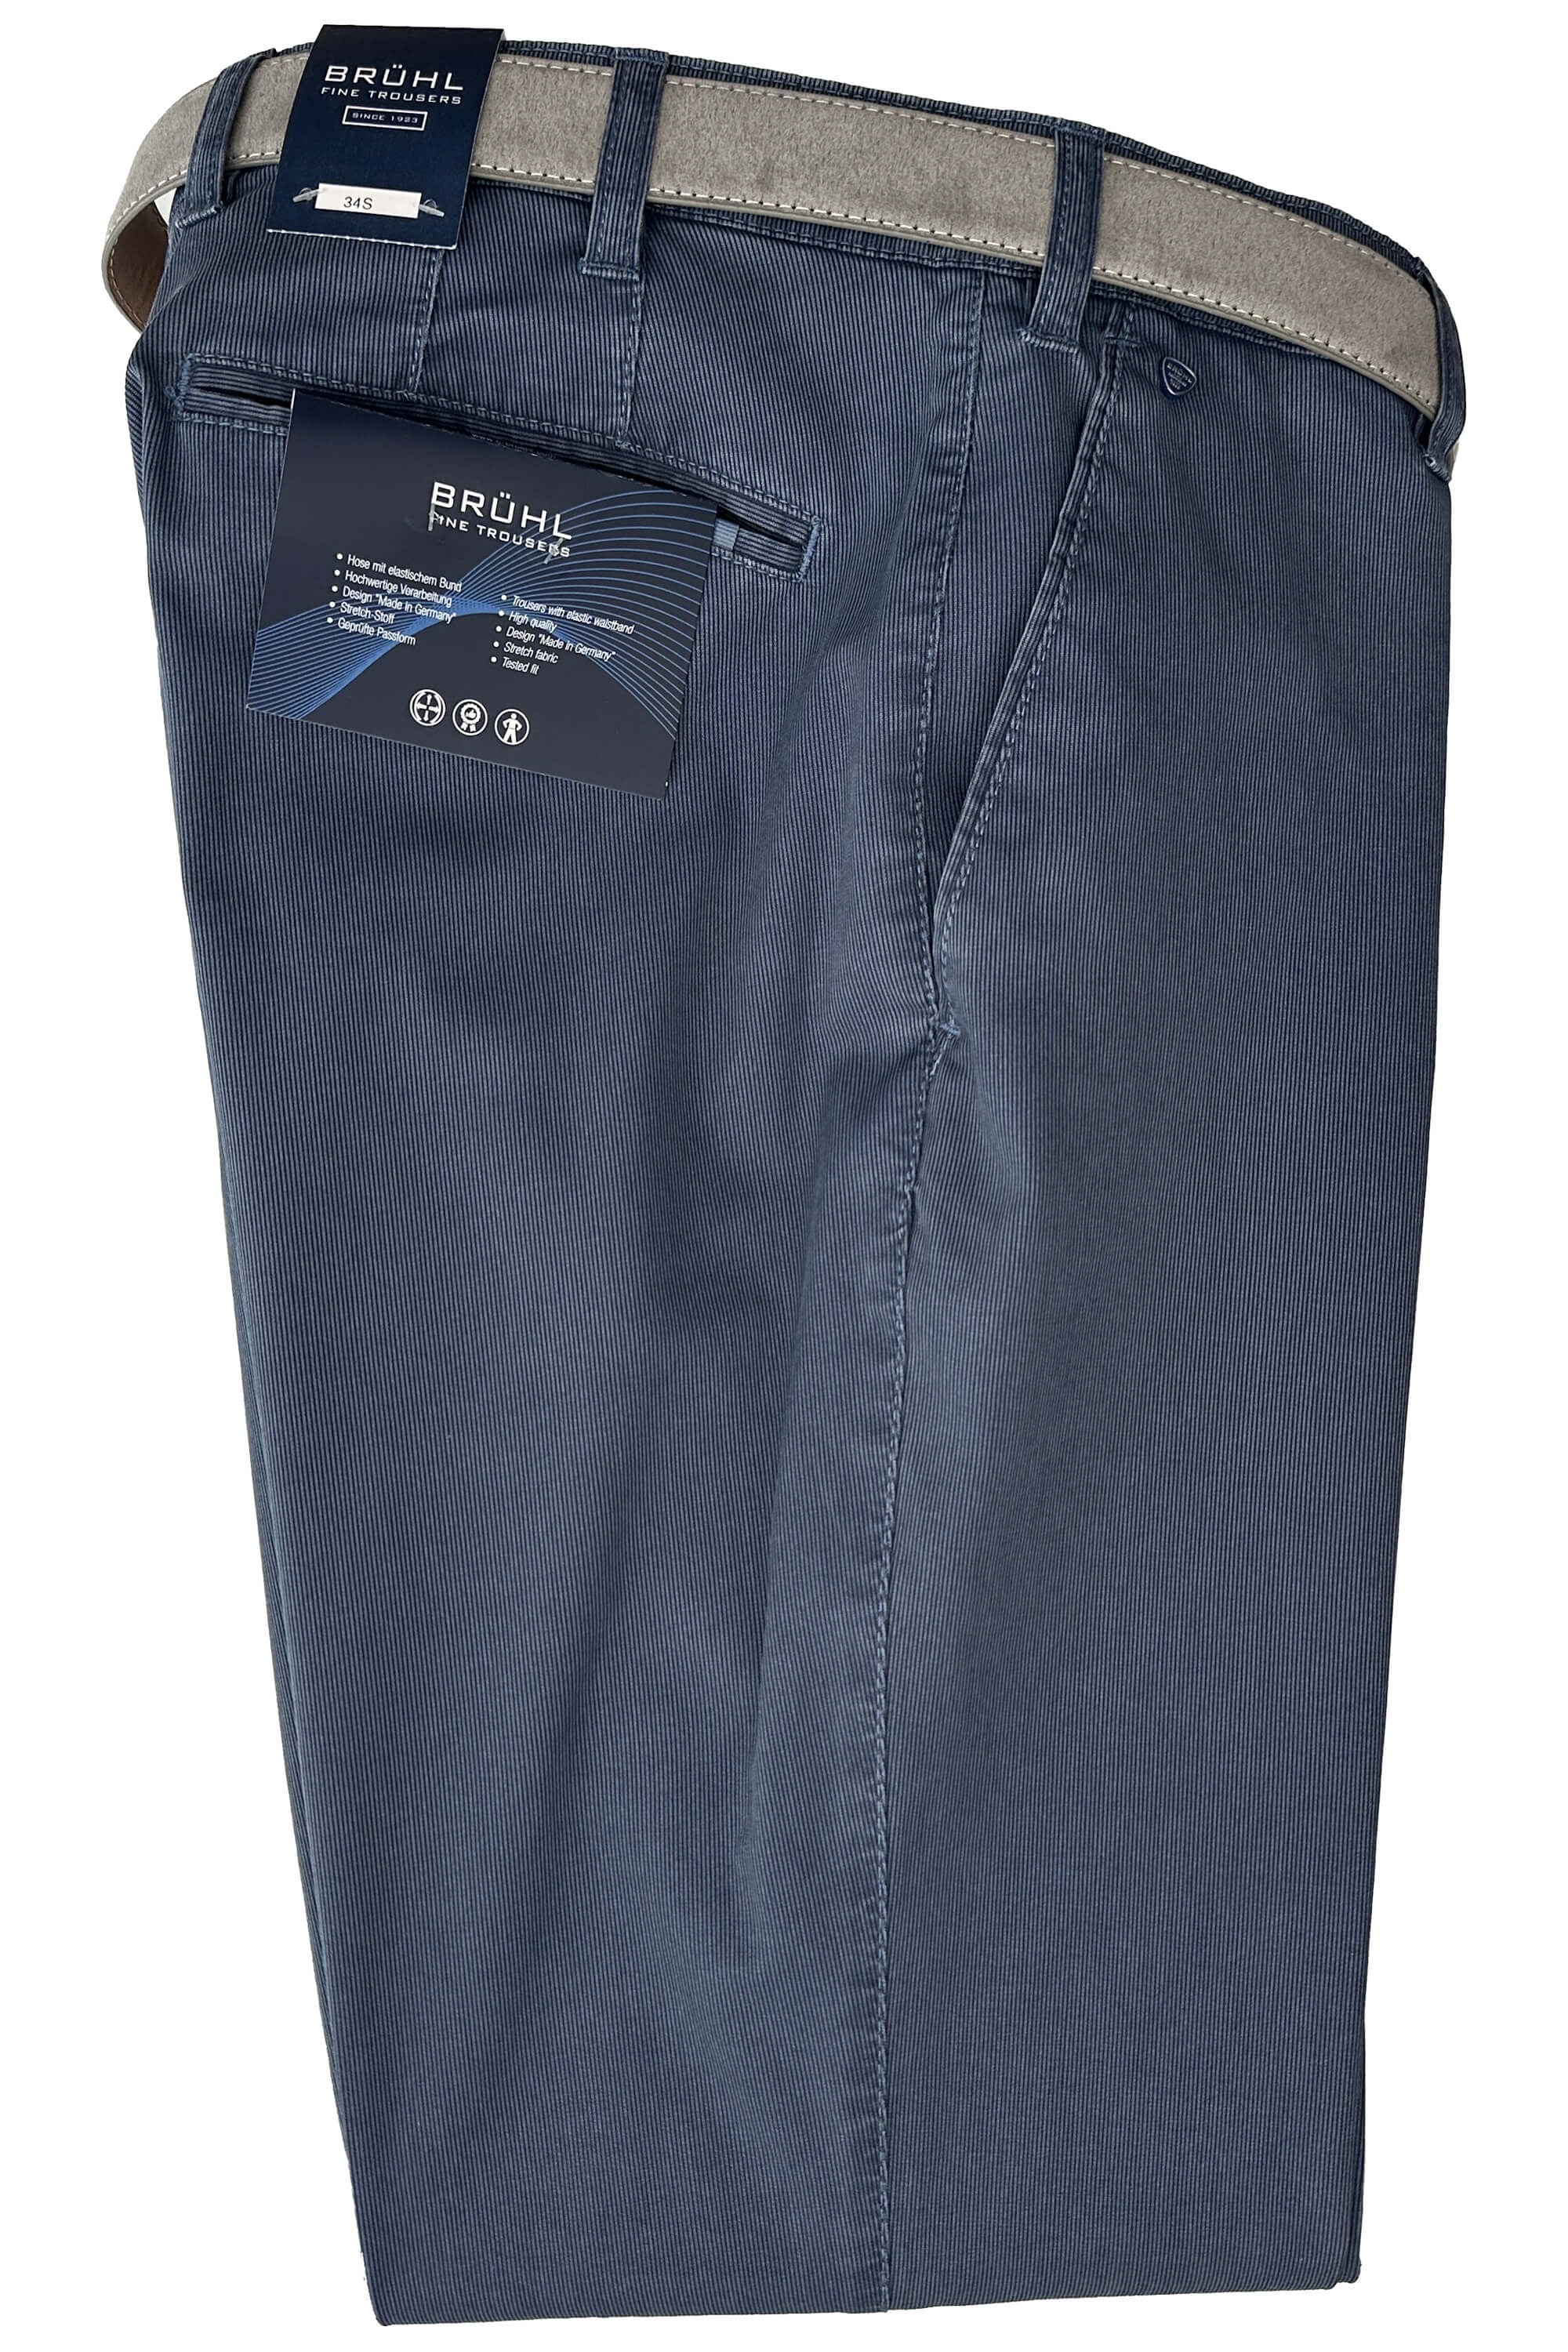 Bruhl Parma Dark Blue Trousers